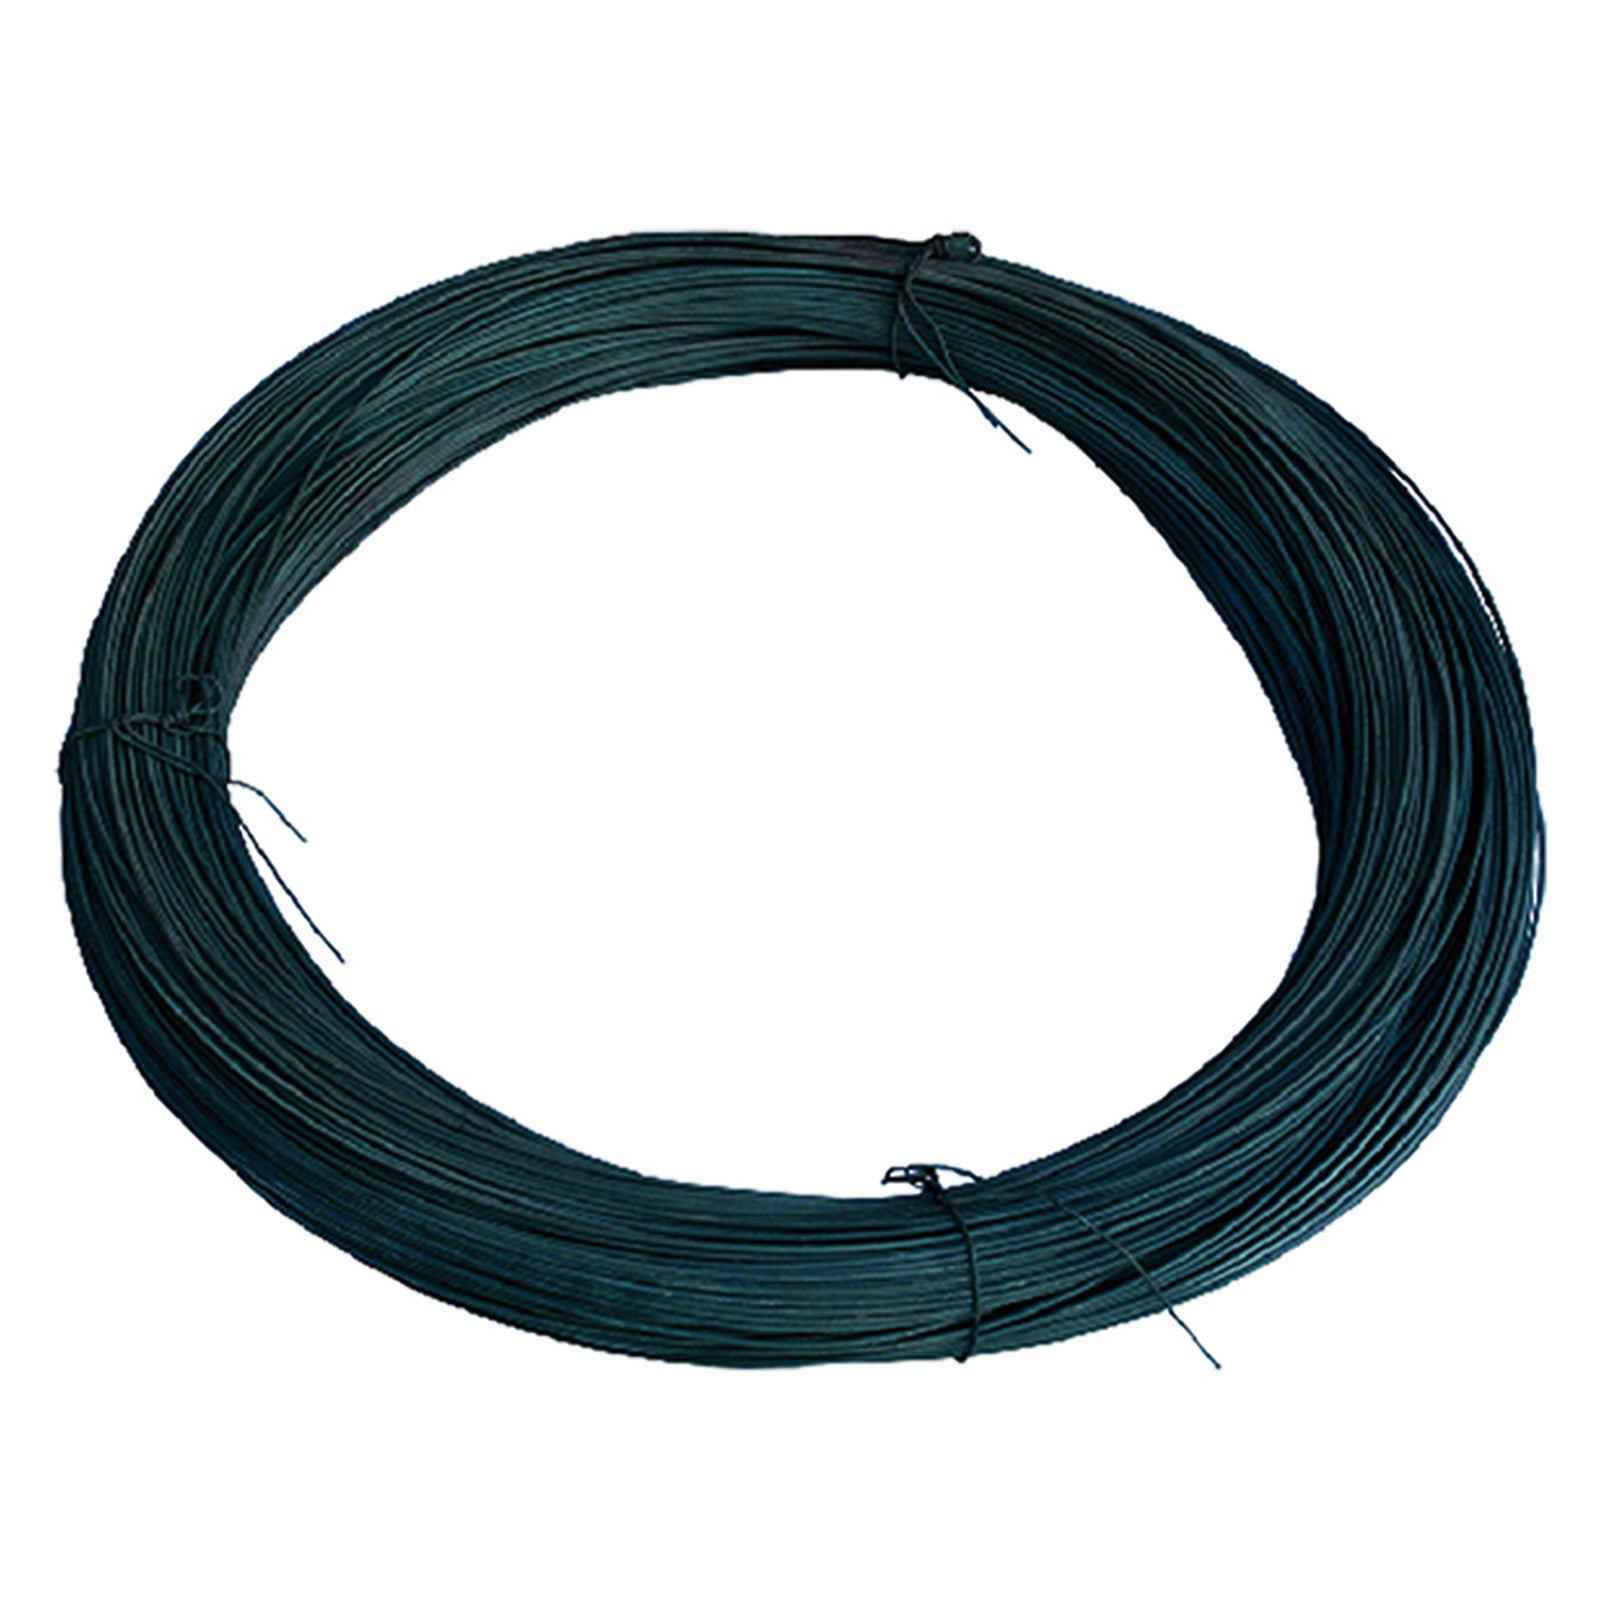 25kg filo ferro nero n. 17 mm 3 cod:ferx.107454nlm